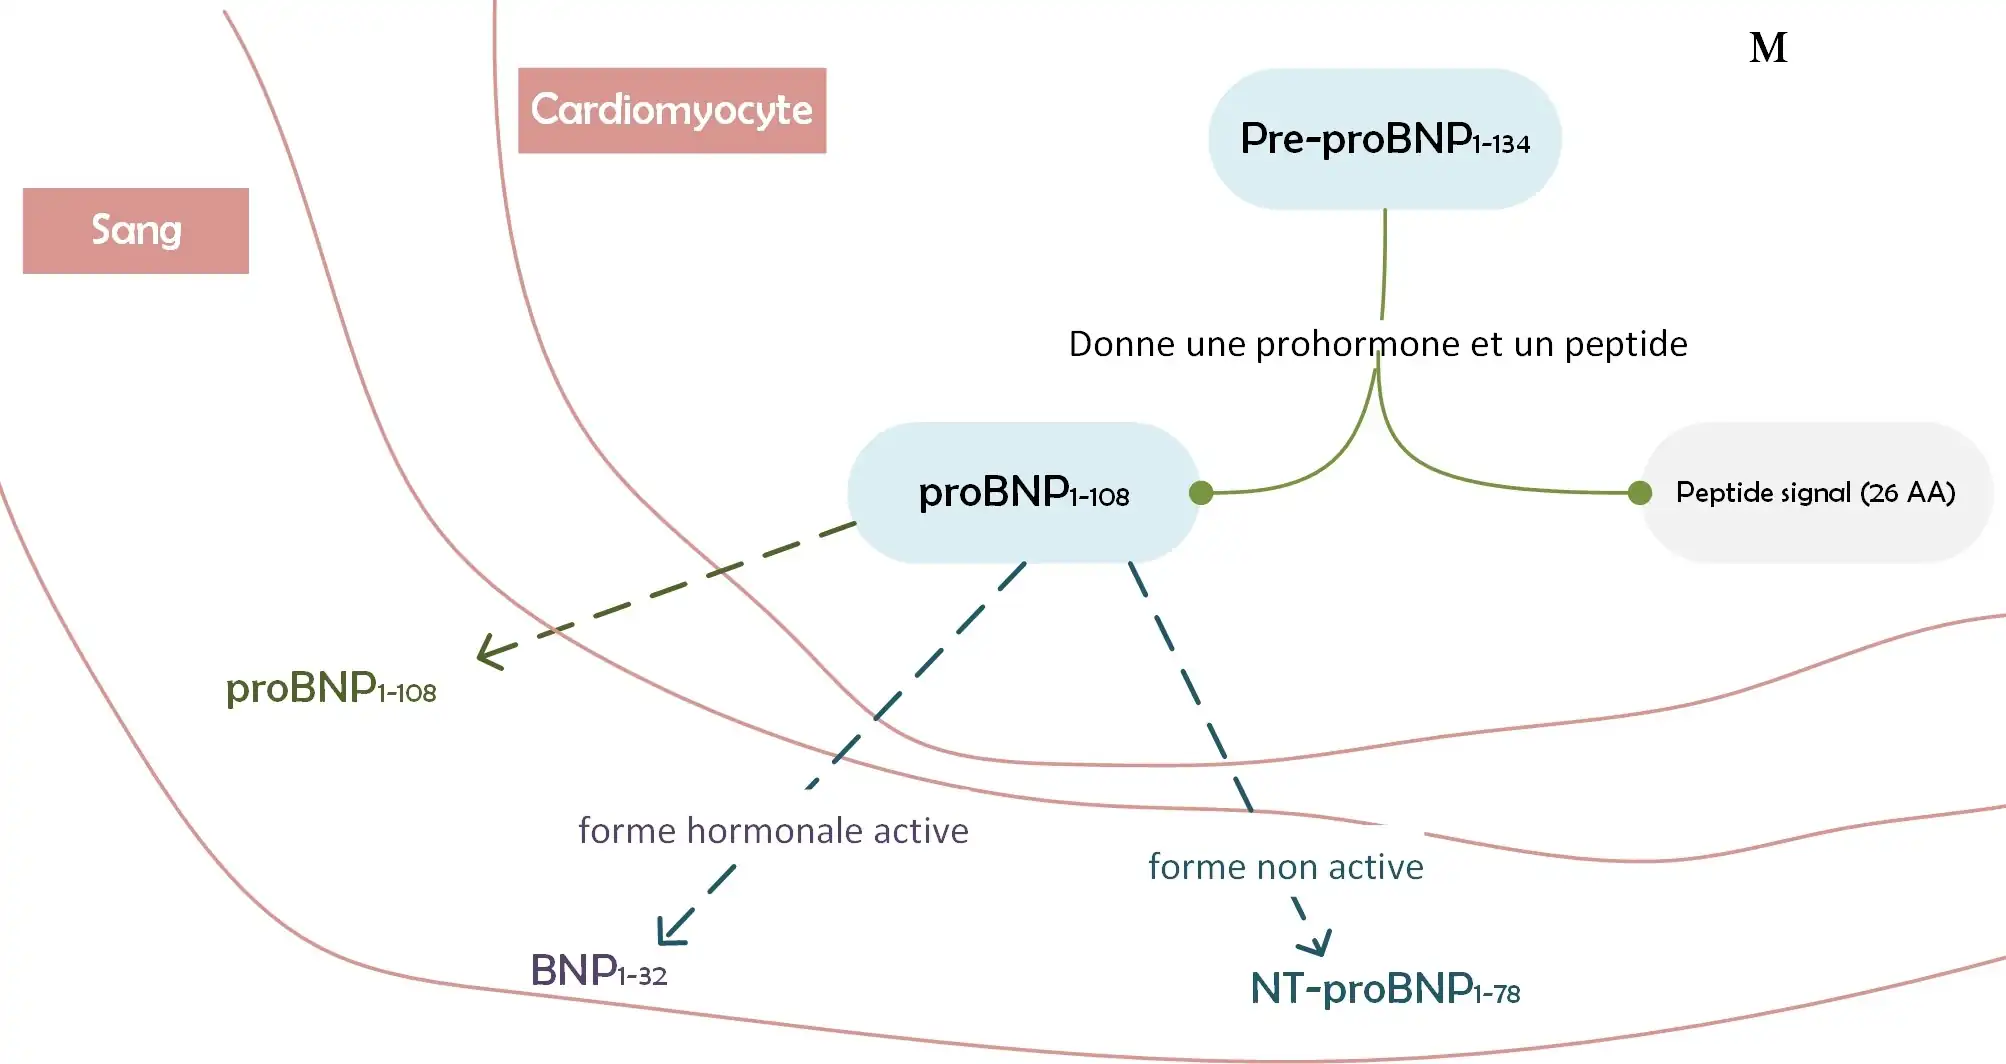 NT-proBNP